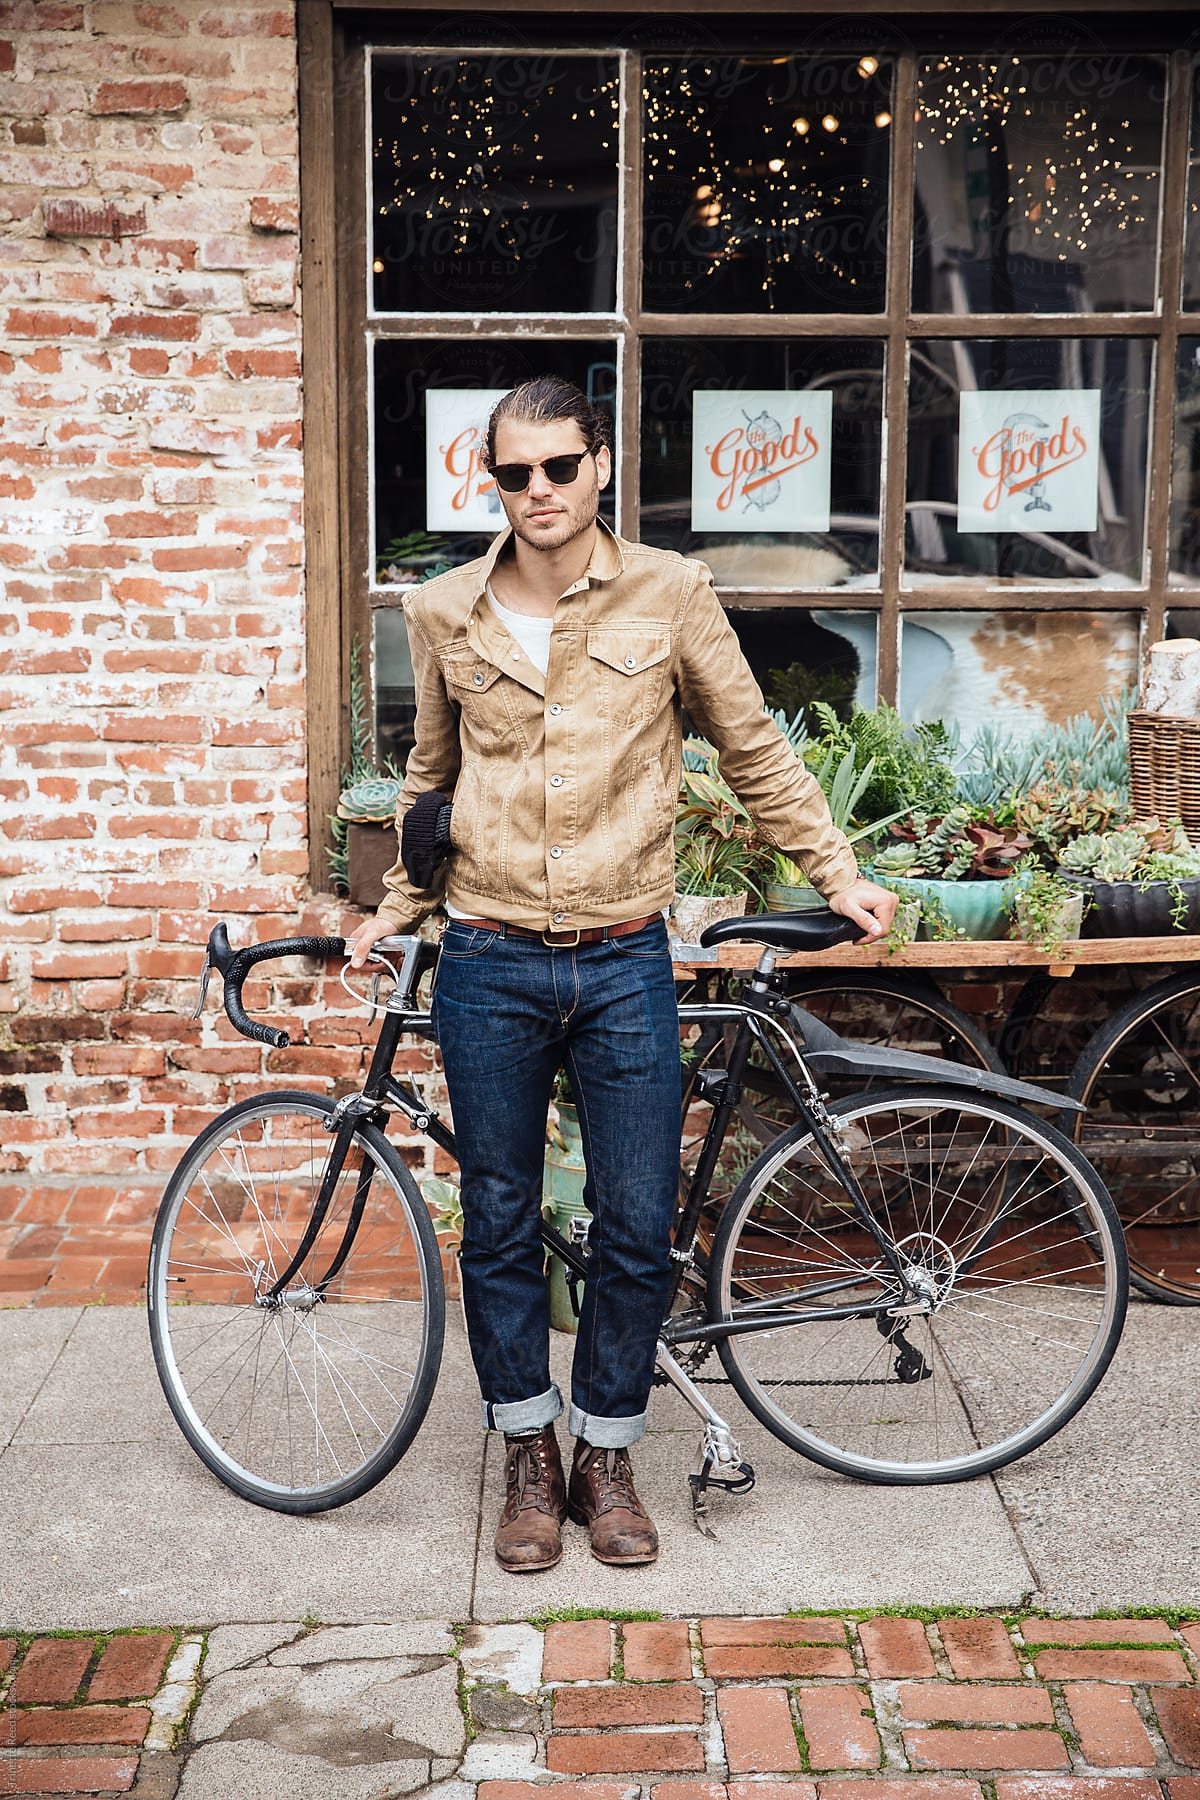 Hipster millennial on bike in urban area